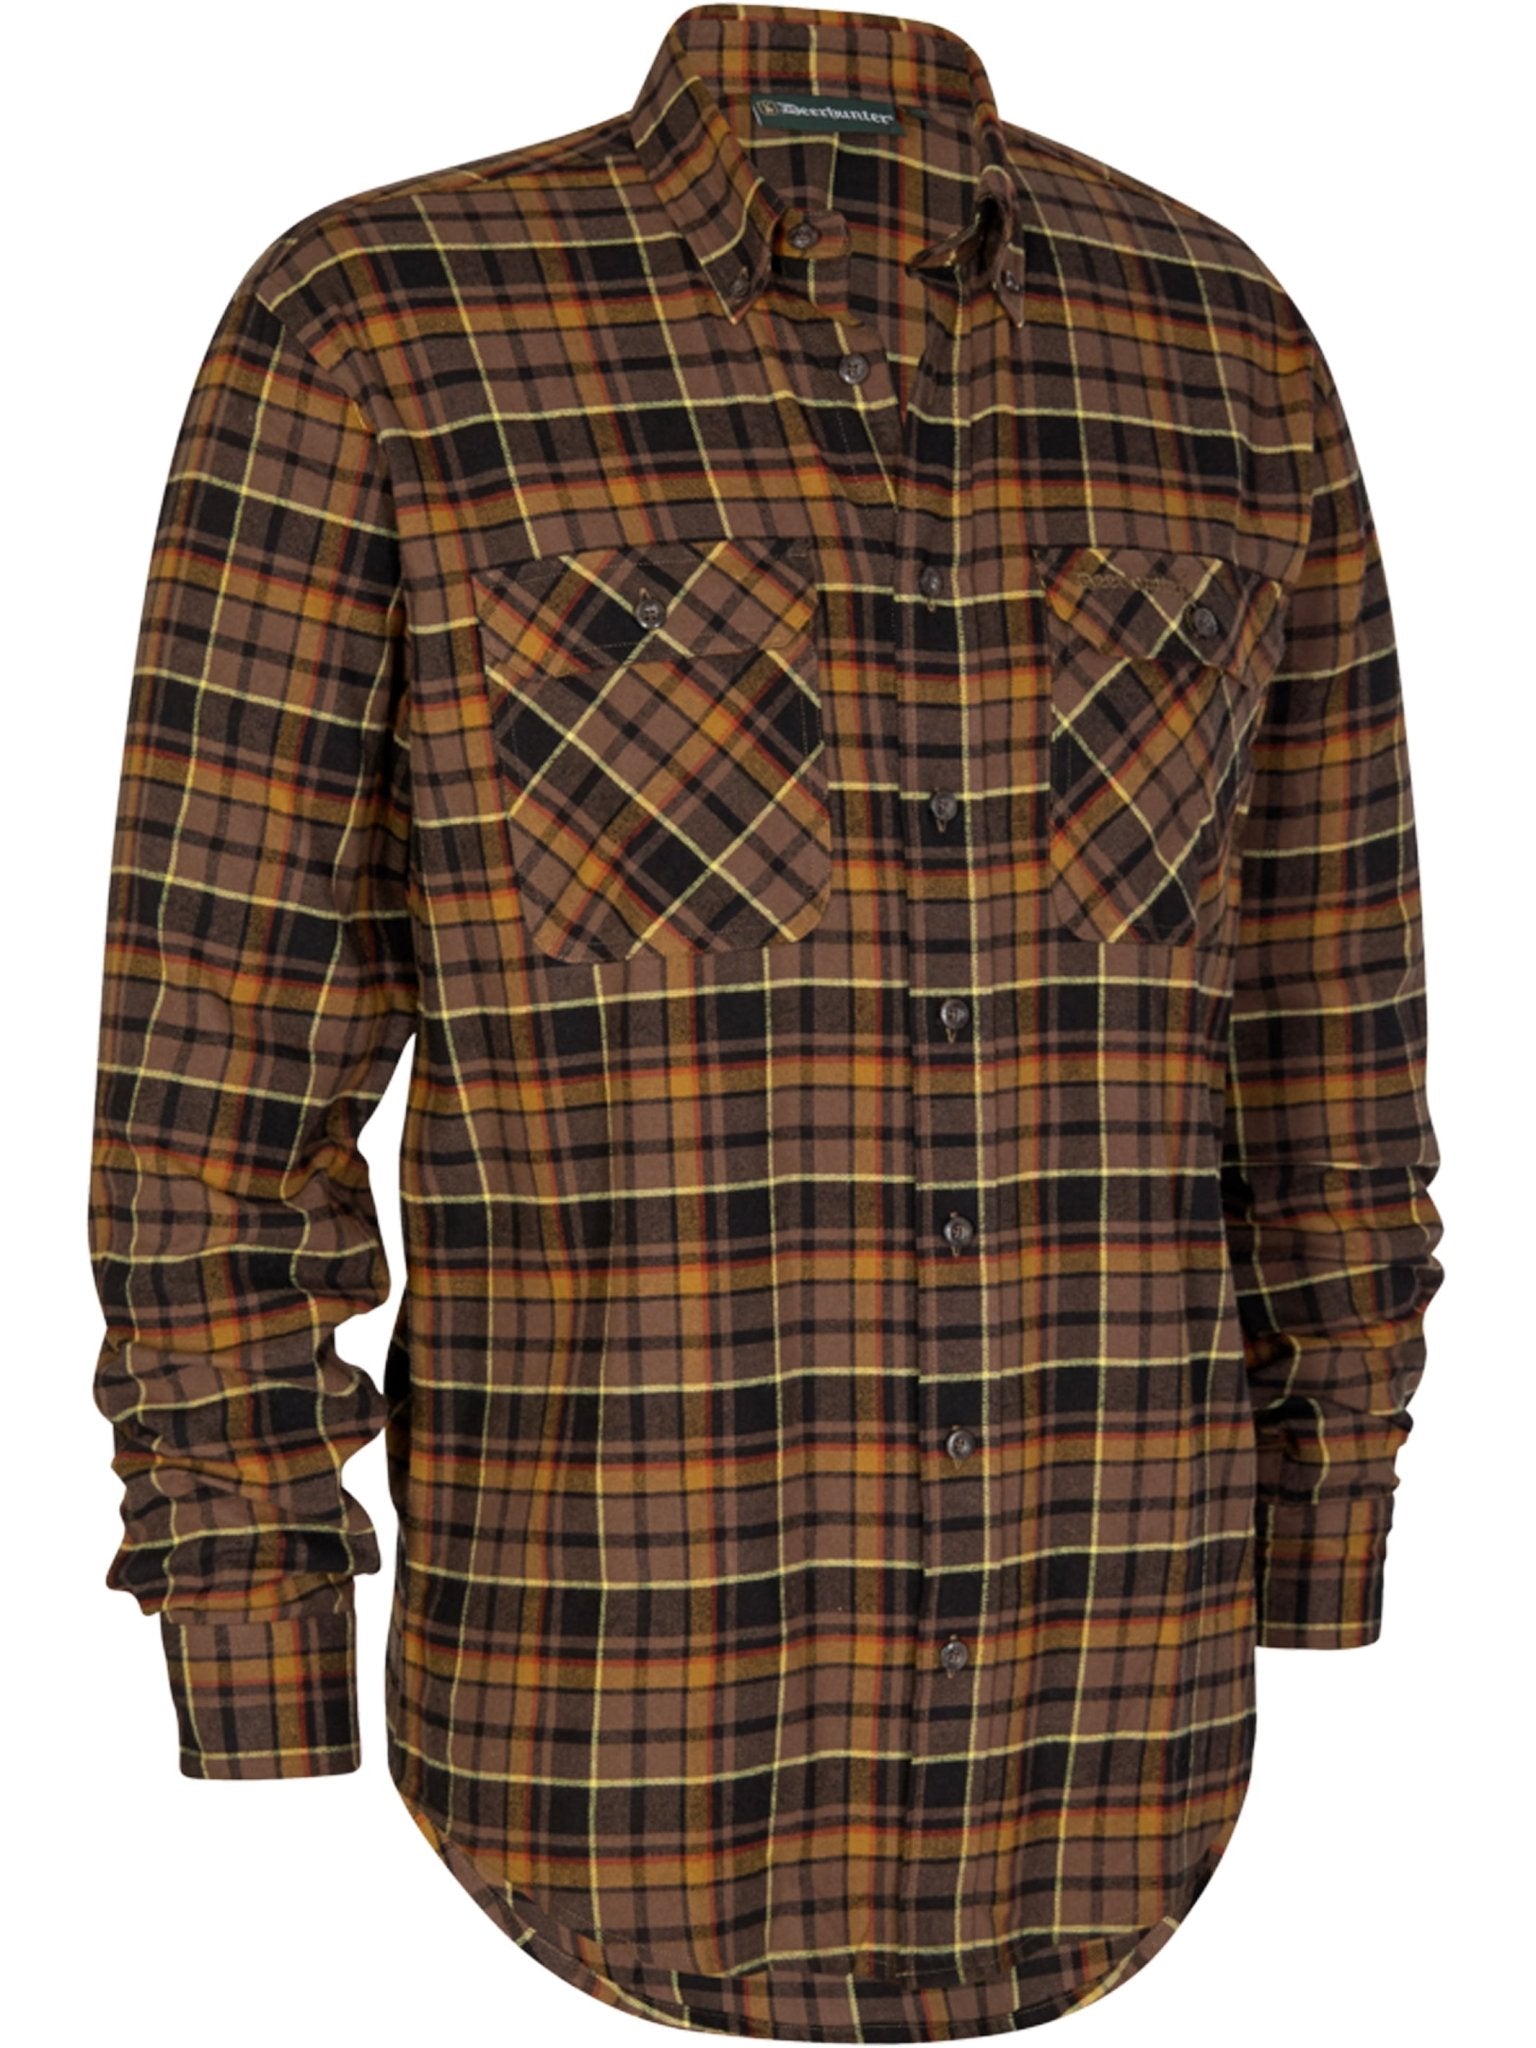 4elementsclothingDeerhunterDeerhunter - Soft Flannel Mens Check Shirt - Marvin premium ShirtShirt8181-58181-3738